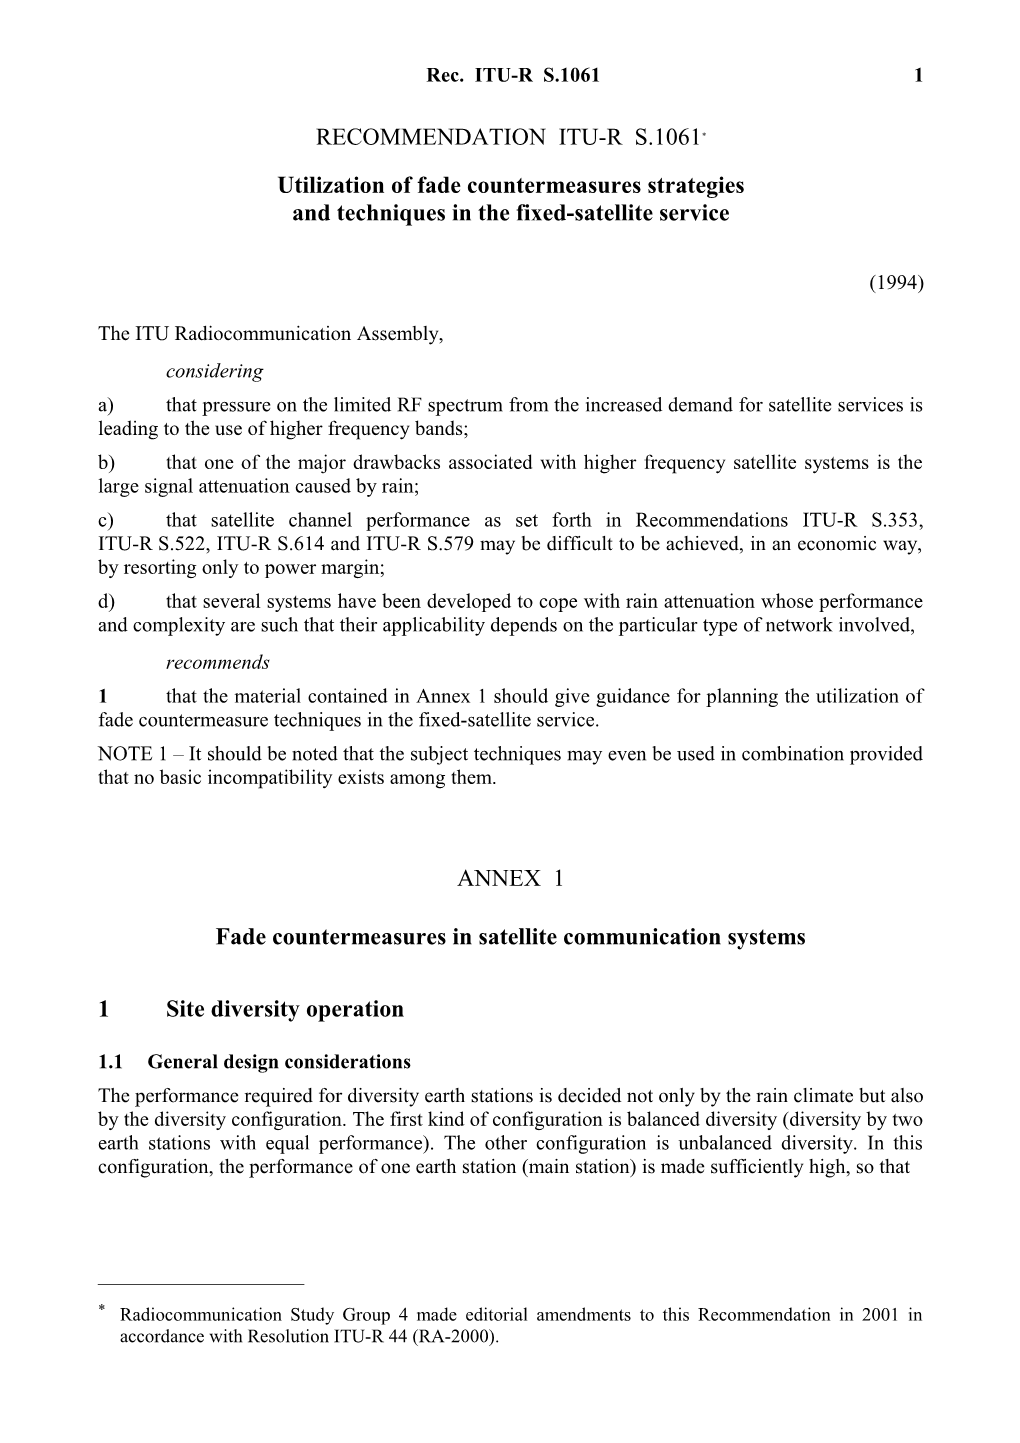 RECOMMENDATION ITU-R S.1061* - Utilization of Fade Countermeasures Strategies and Techniques